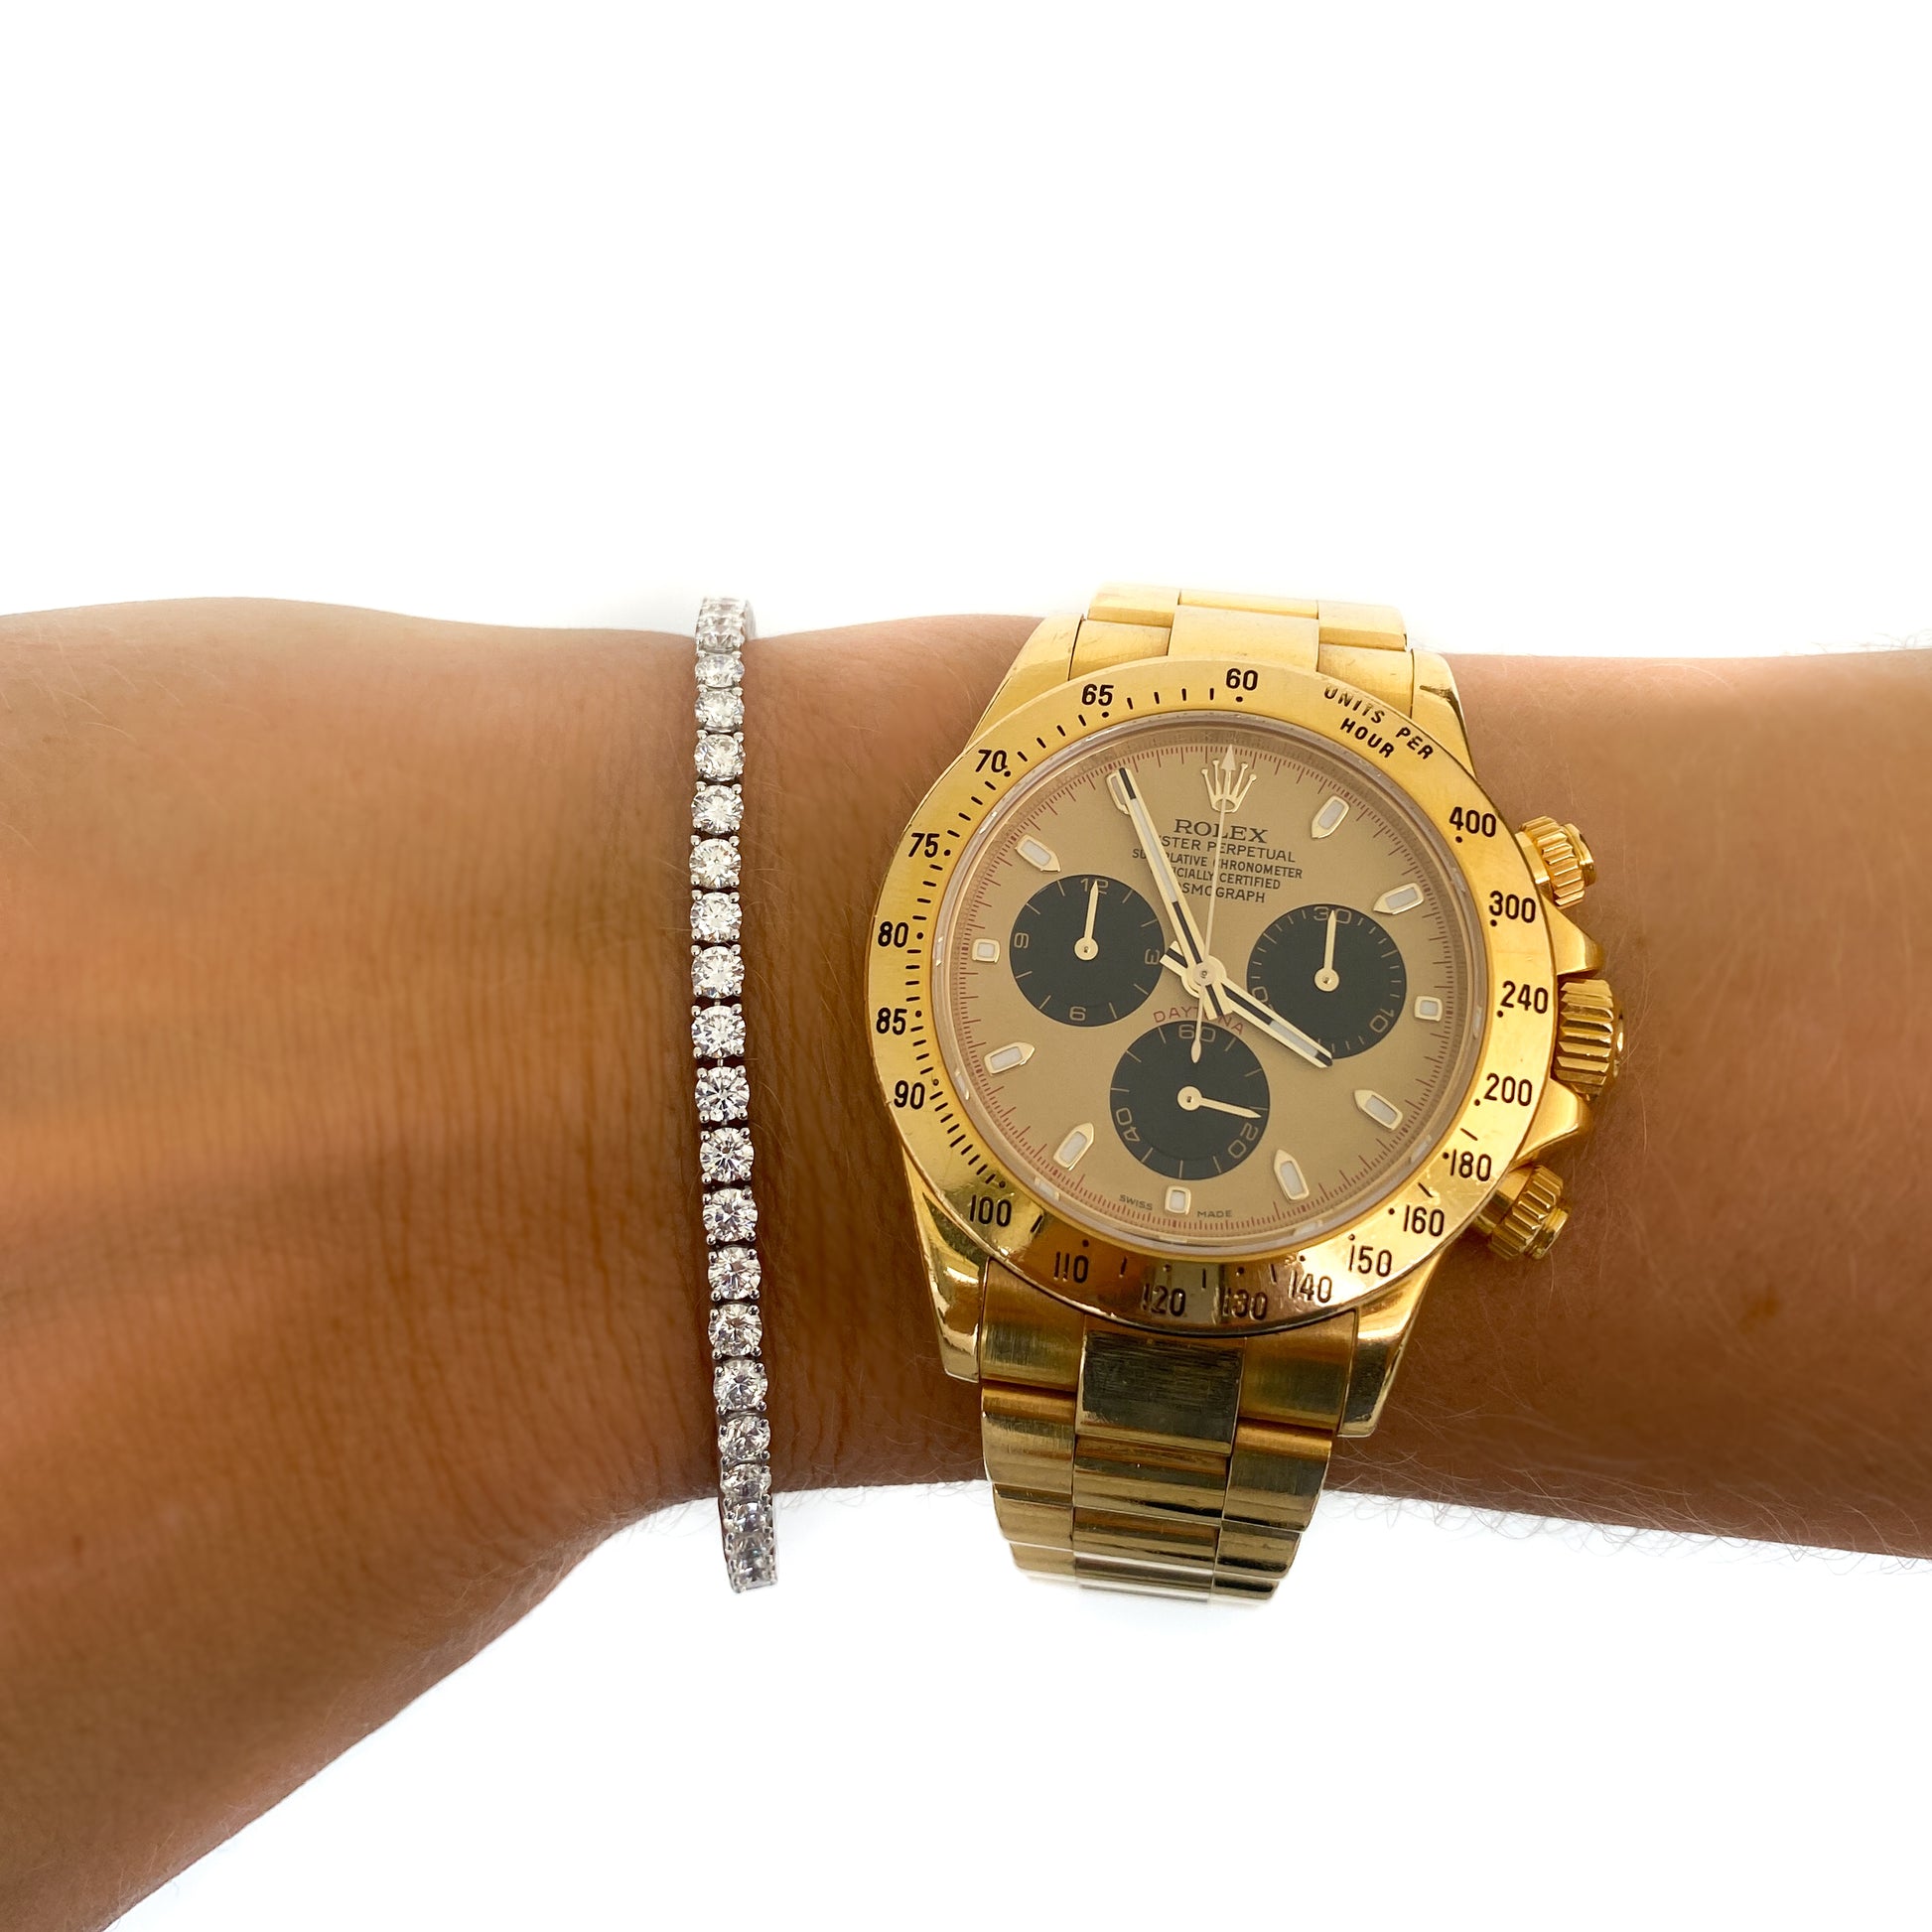 Gold Rolex Daytona and 6 ct diamond tennis bracelet, natural diamond bracelet, gold daytona, bracelet stack